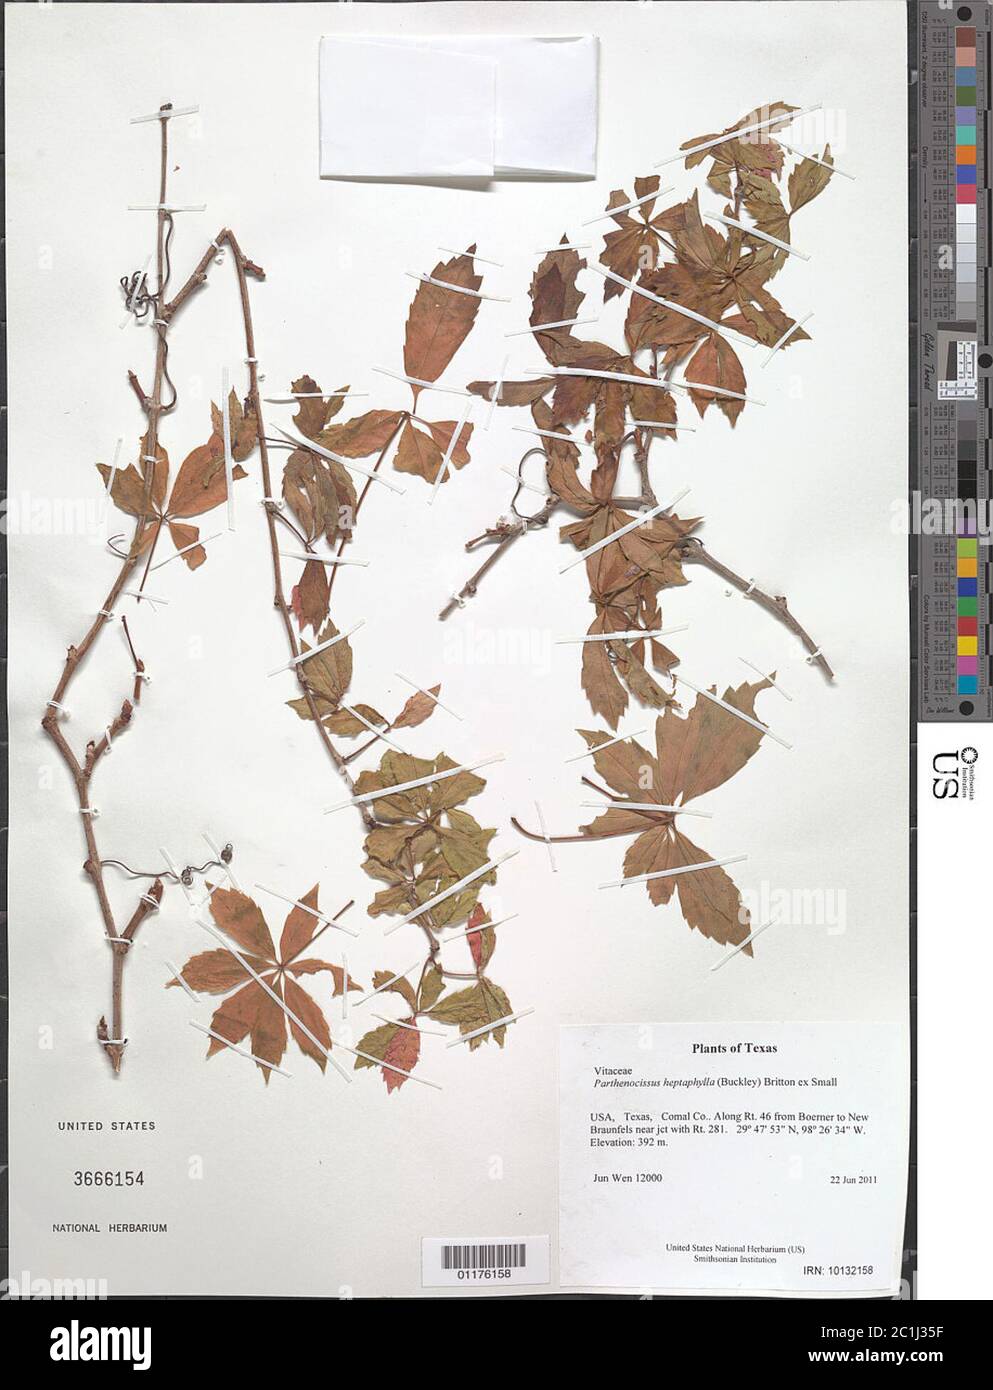 Parthenocissus heptaphylla Buckley Britton ex Small Parthenocissus heptaphylla Buckley Britton ex Small. Stock Photo